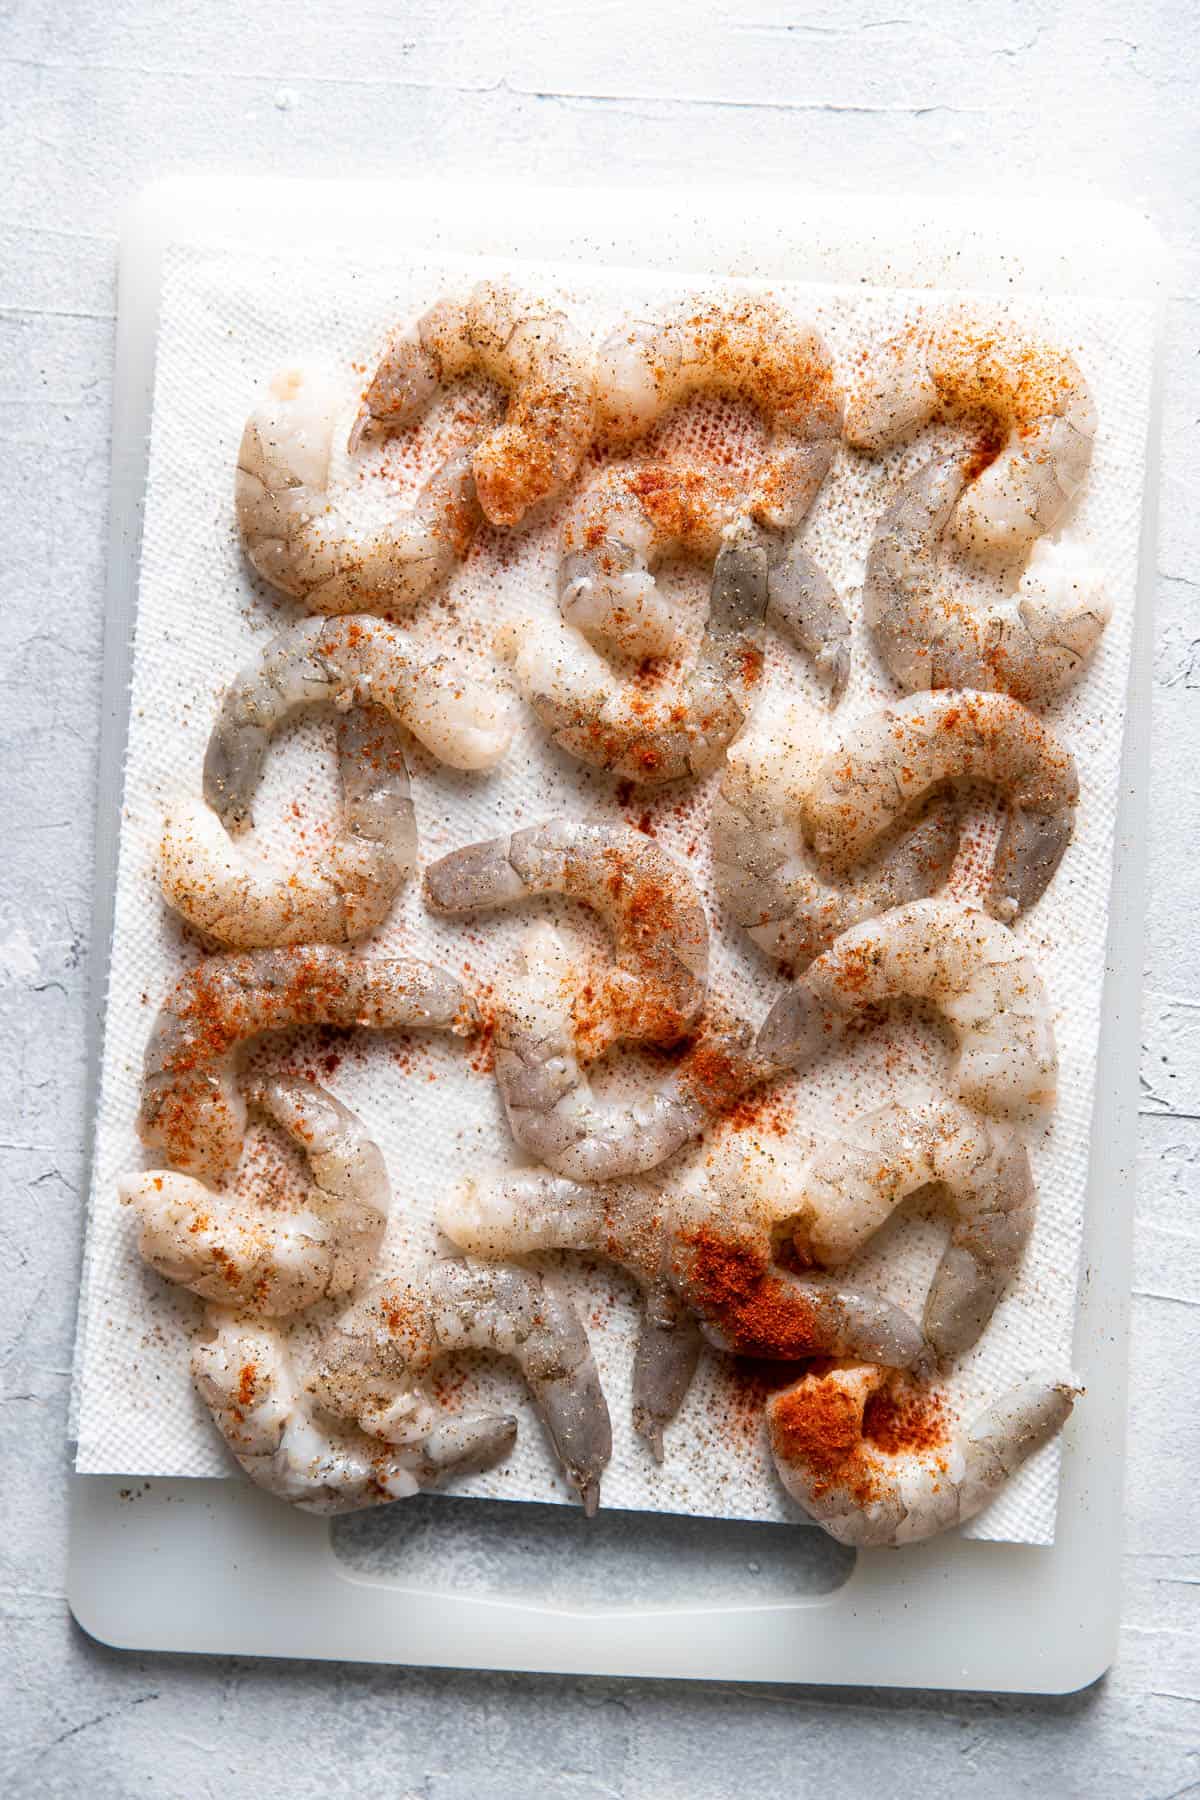 seasoned raw shrimp on a paper towel.